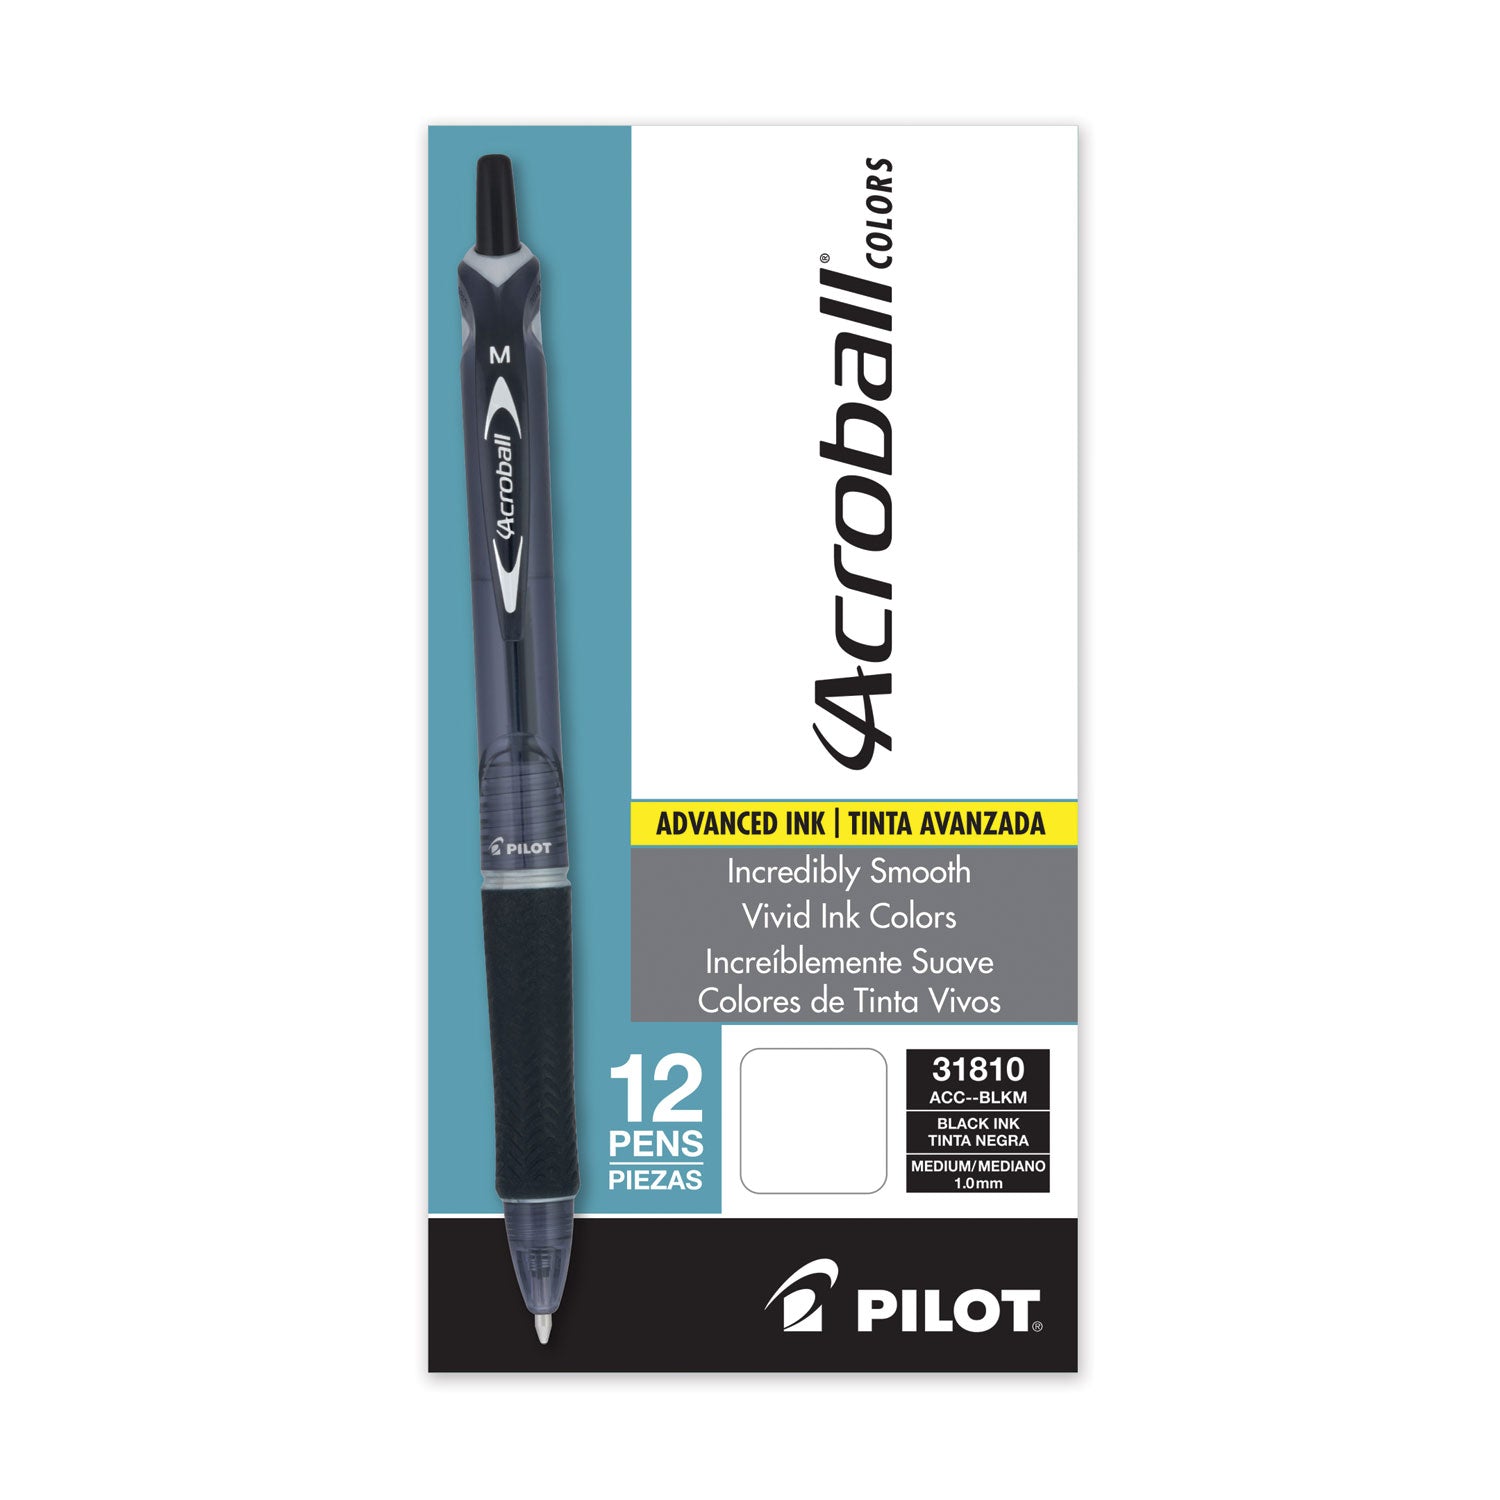 Acroball Colors Advanced Ink Hybrid Gel Pen, Retractable, Medium 1 mm, Black Ink, Smoke/Black Barrel, Dozen - 